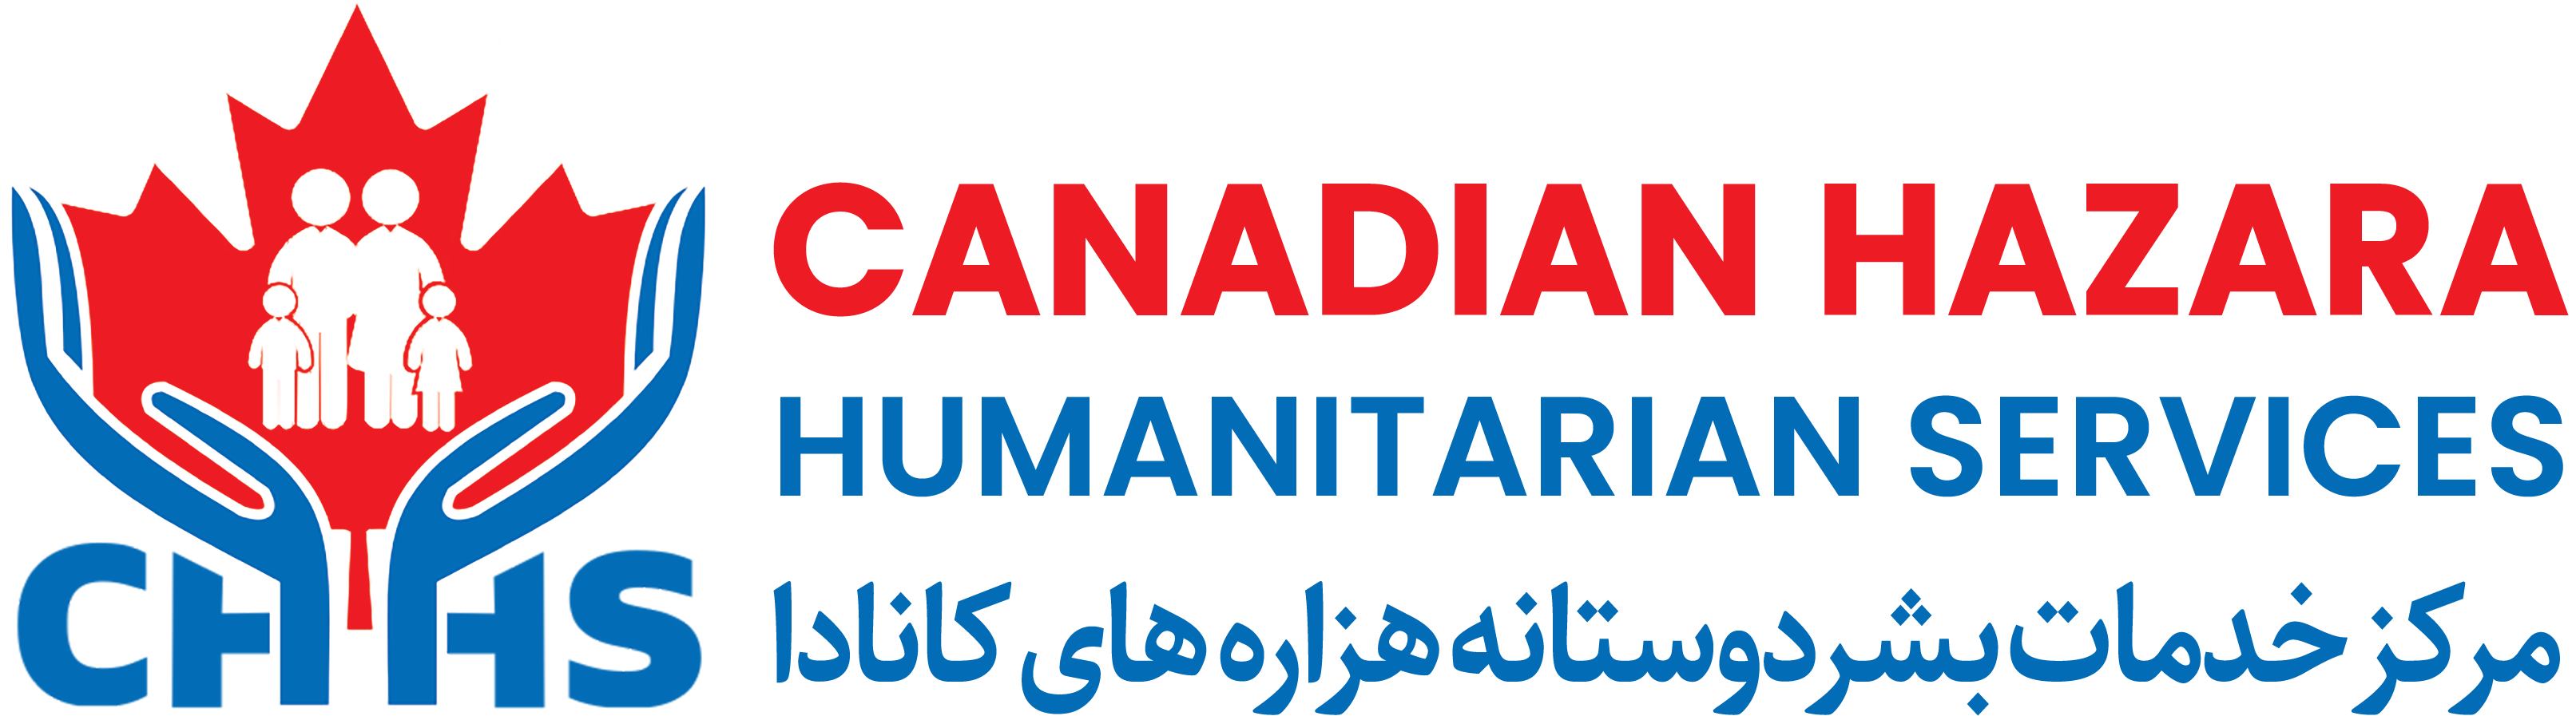 Canadian Hazara Humanitarian Services